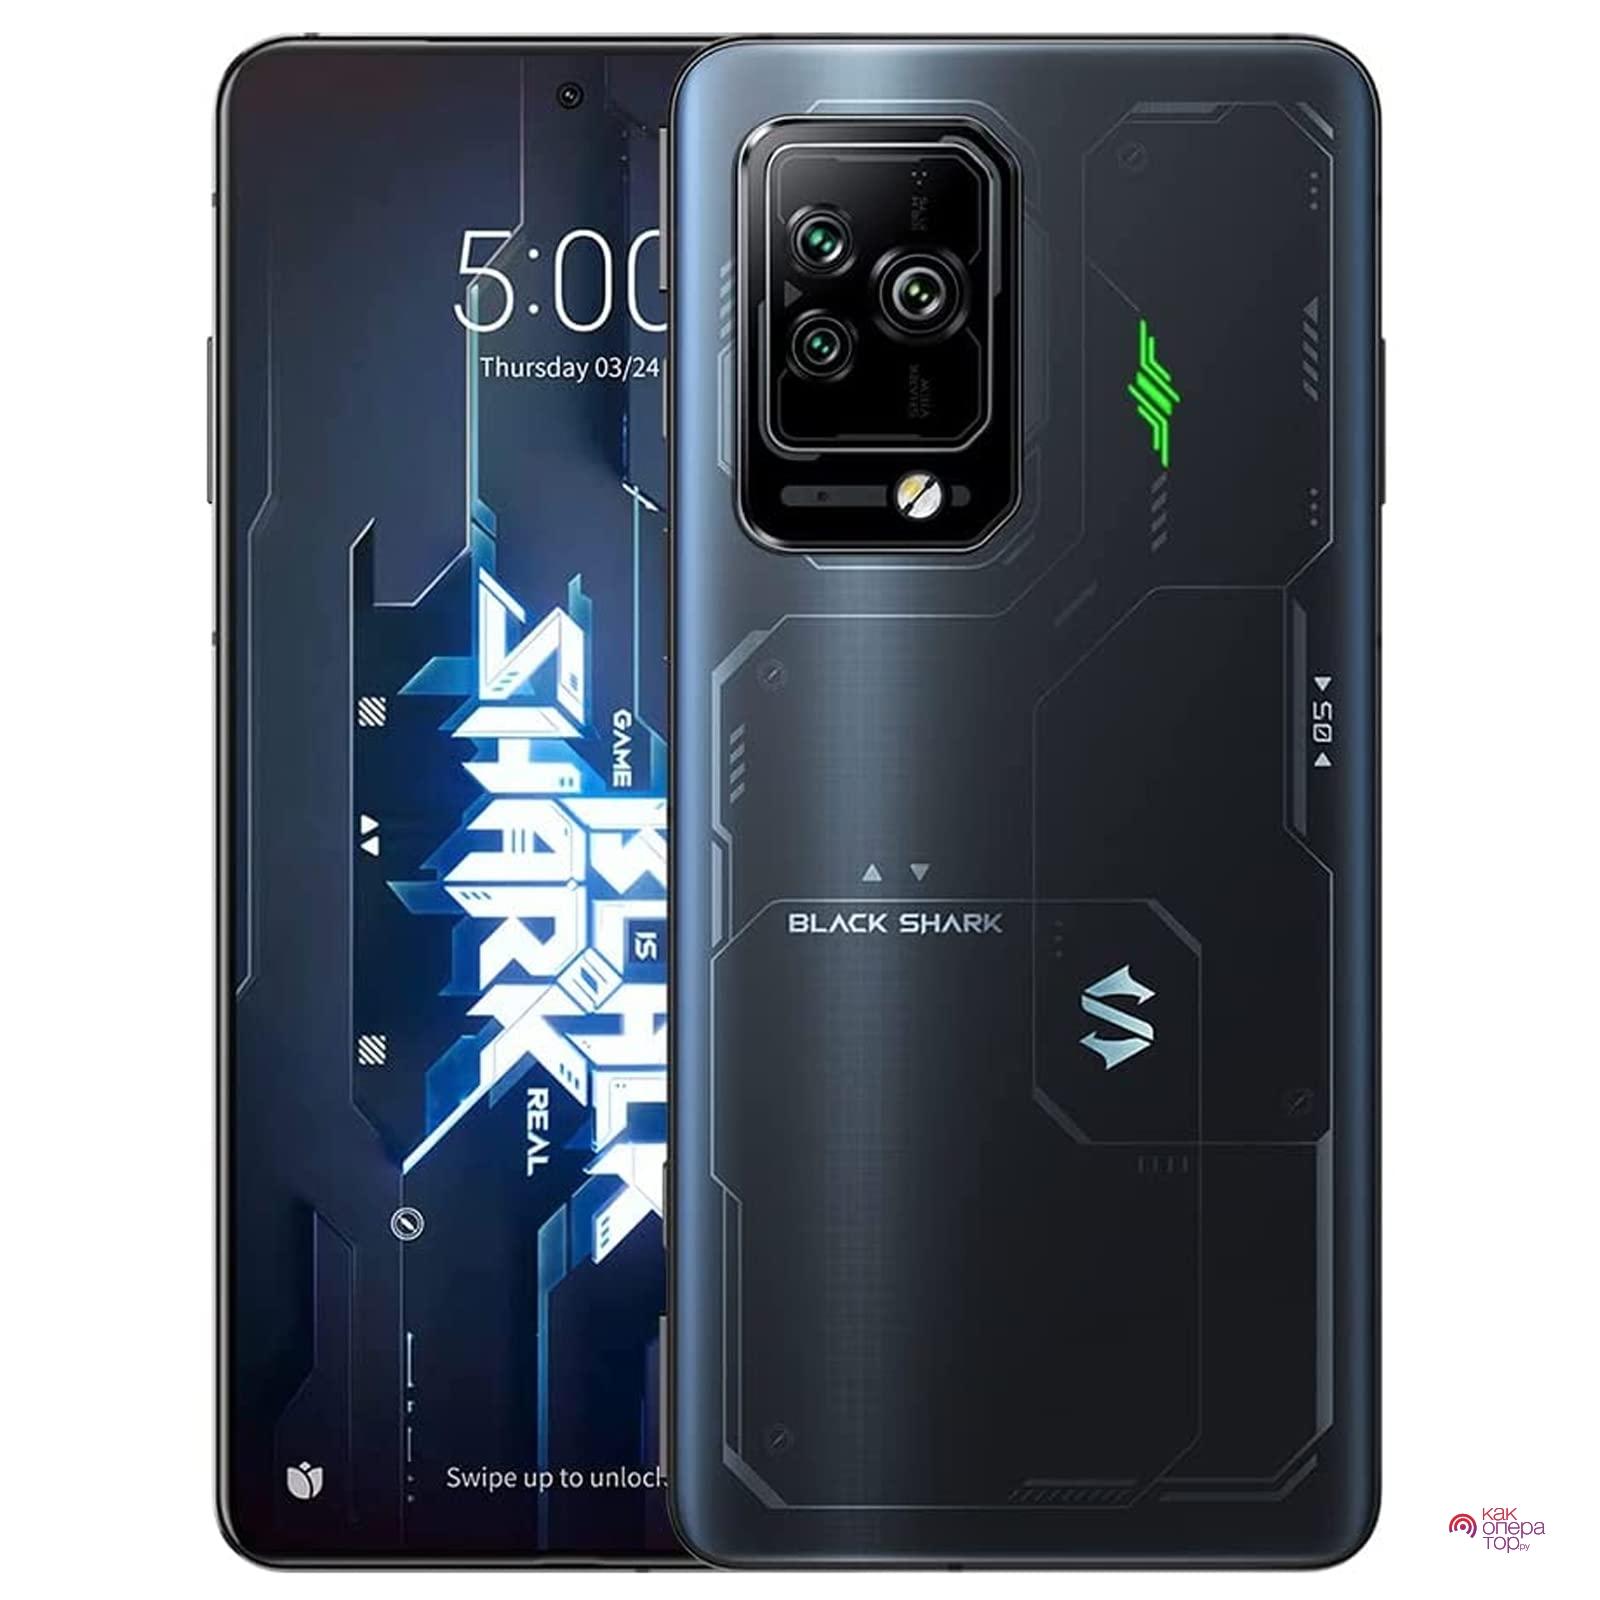 Black Shark 5 Pro Unlocked Gaming Smartphone, 8 GB + 128 GB 5G Cell Phone, 6.67" E4 144Hz Display, Snapdragon 8 Gen 1 + LPDDR5 + UFS3.1, 64MP Camera, 120W Charging with 4650mAh - Black